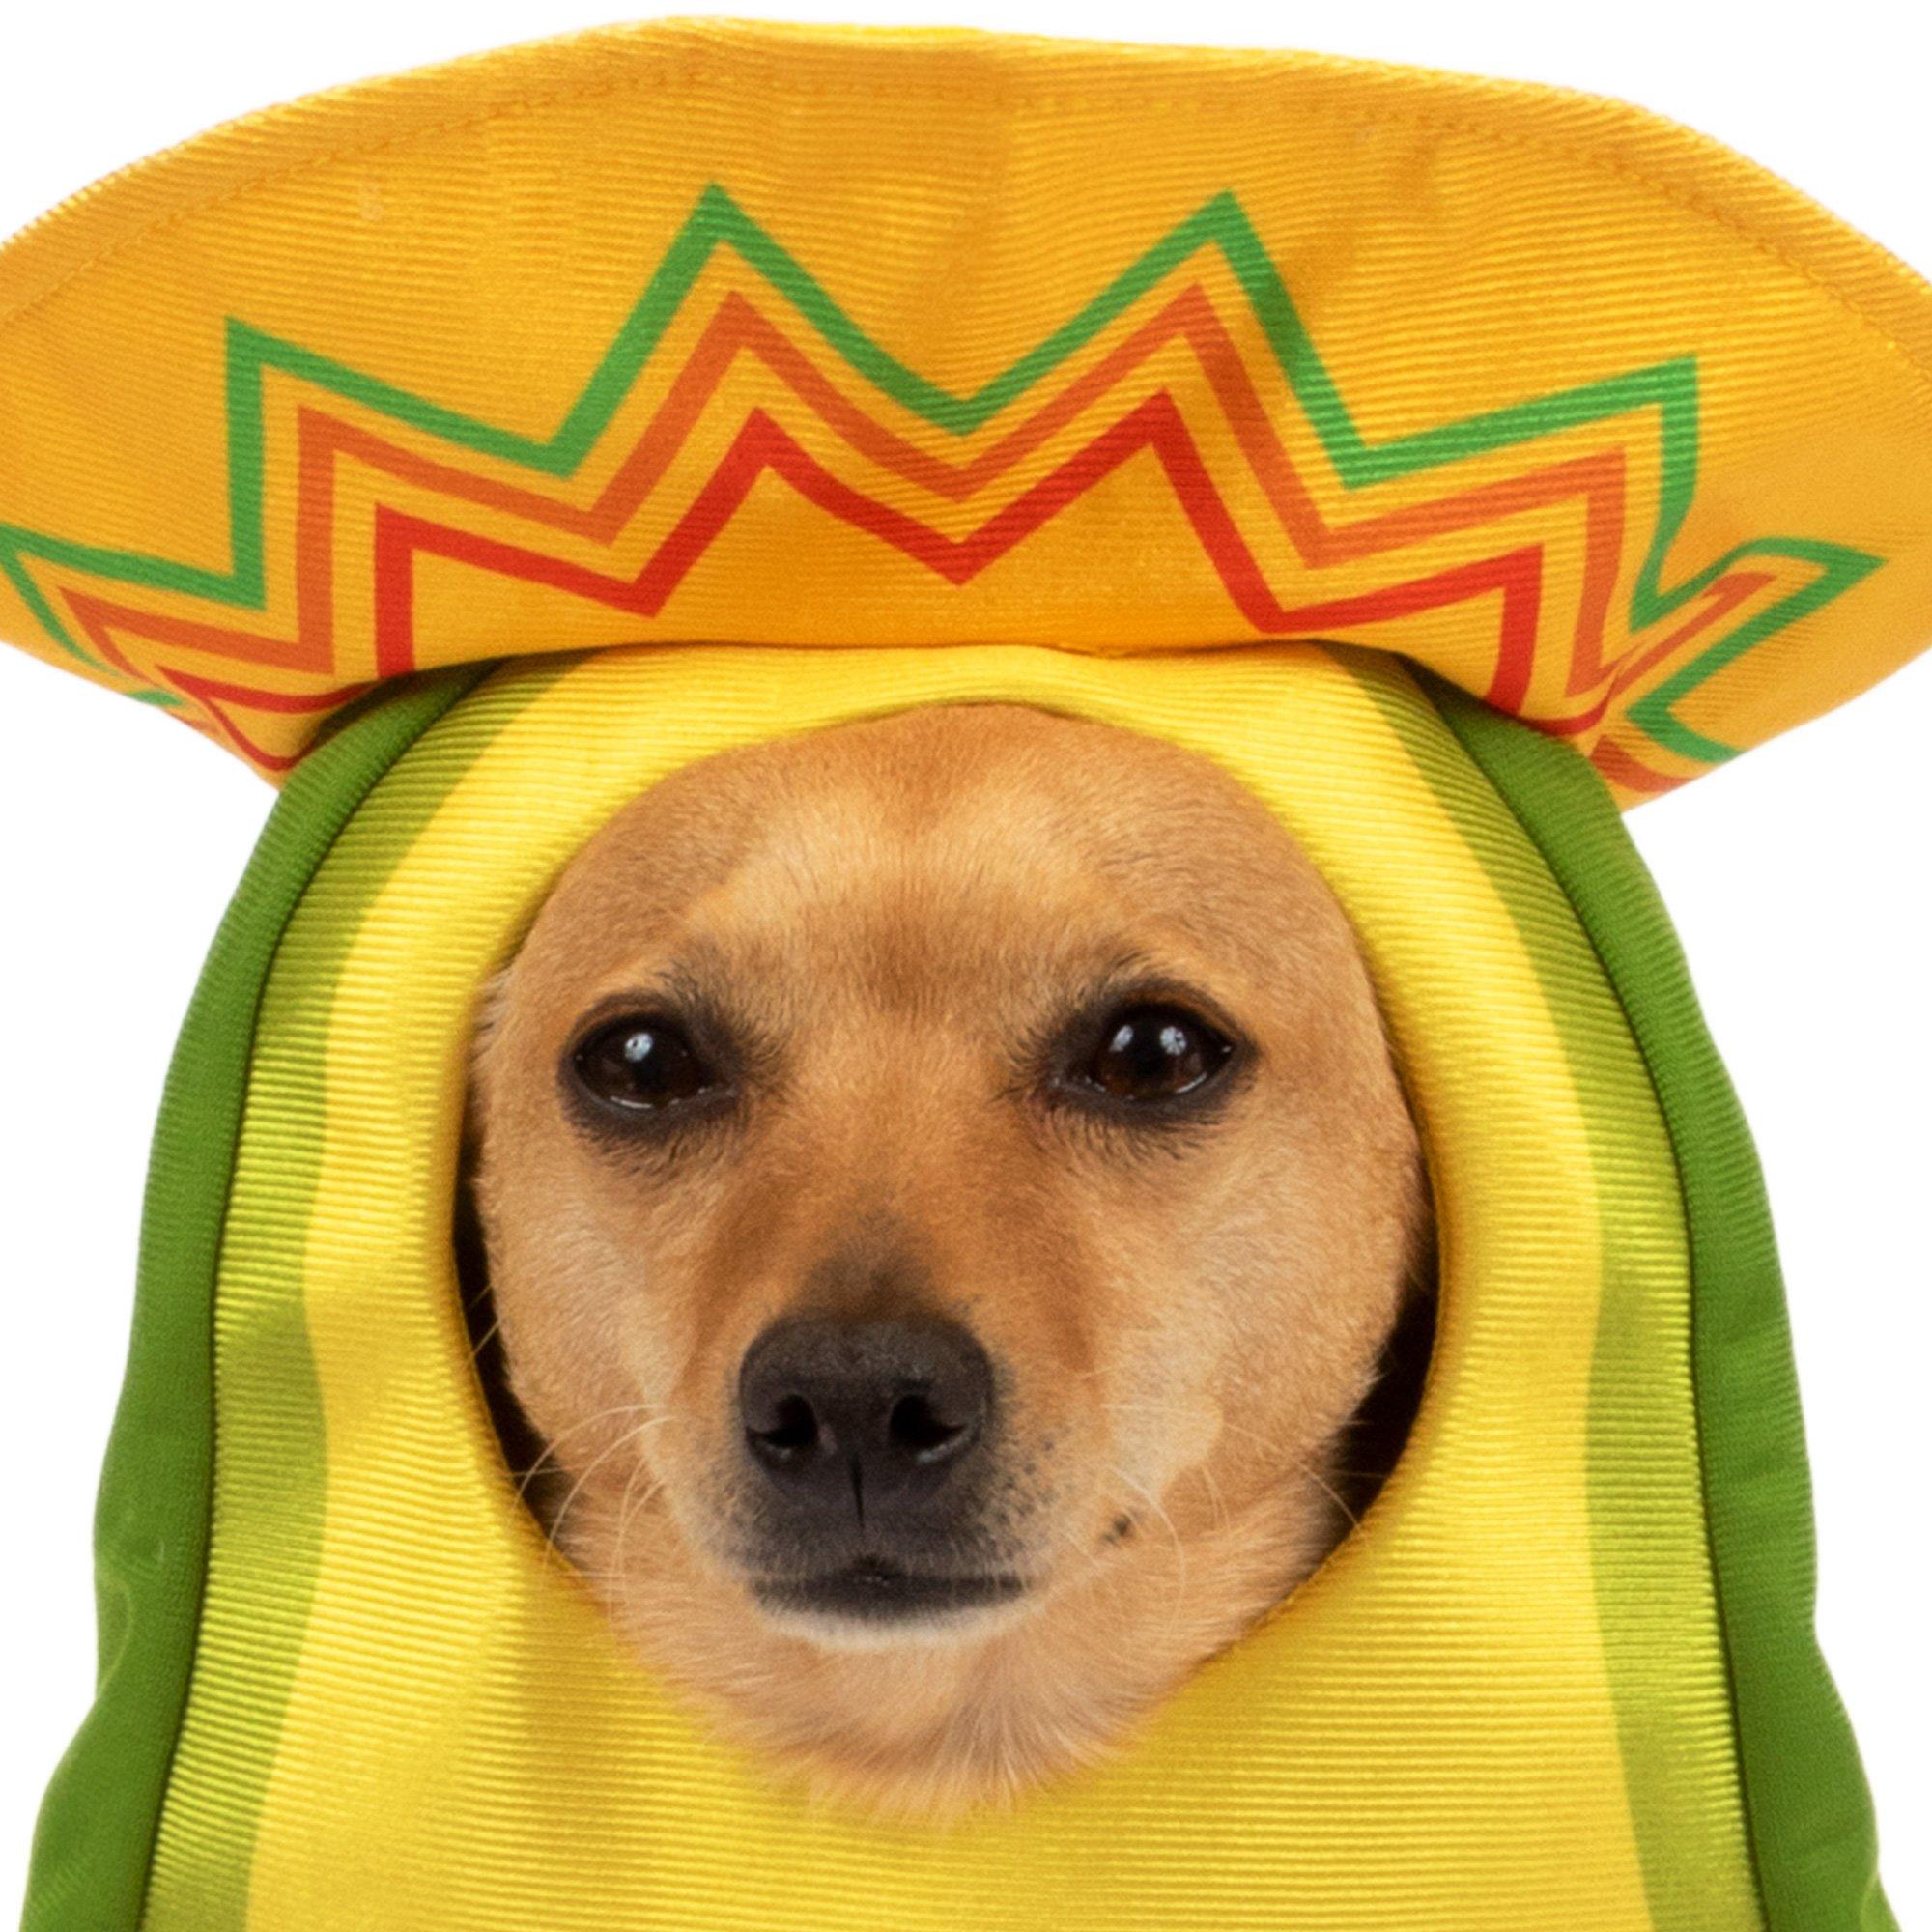 Avocado Sombrero Costume for Dogs